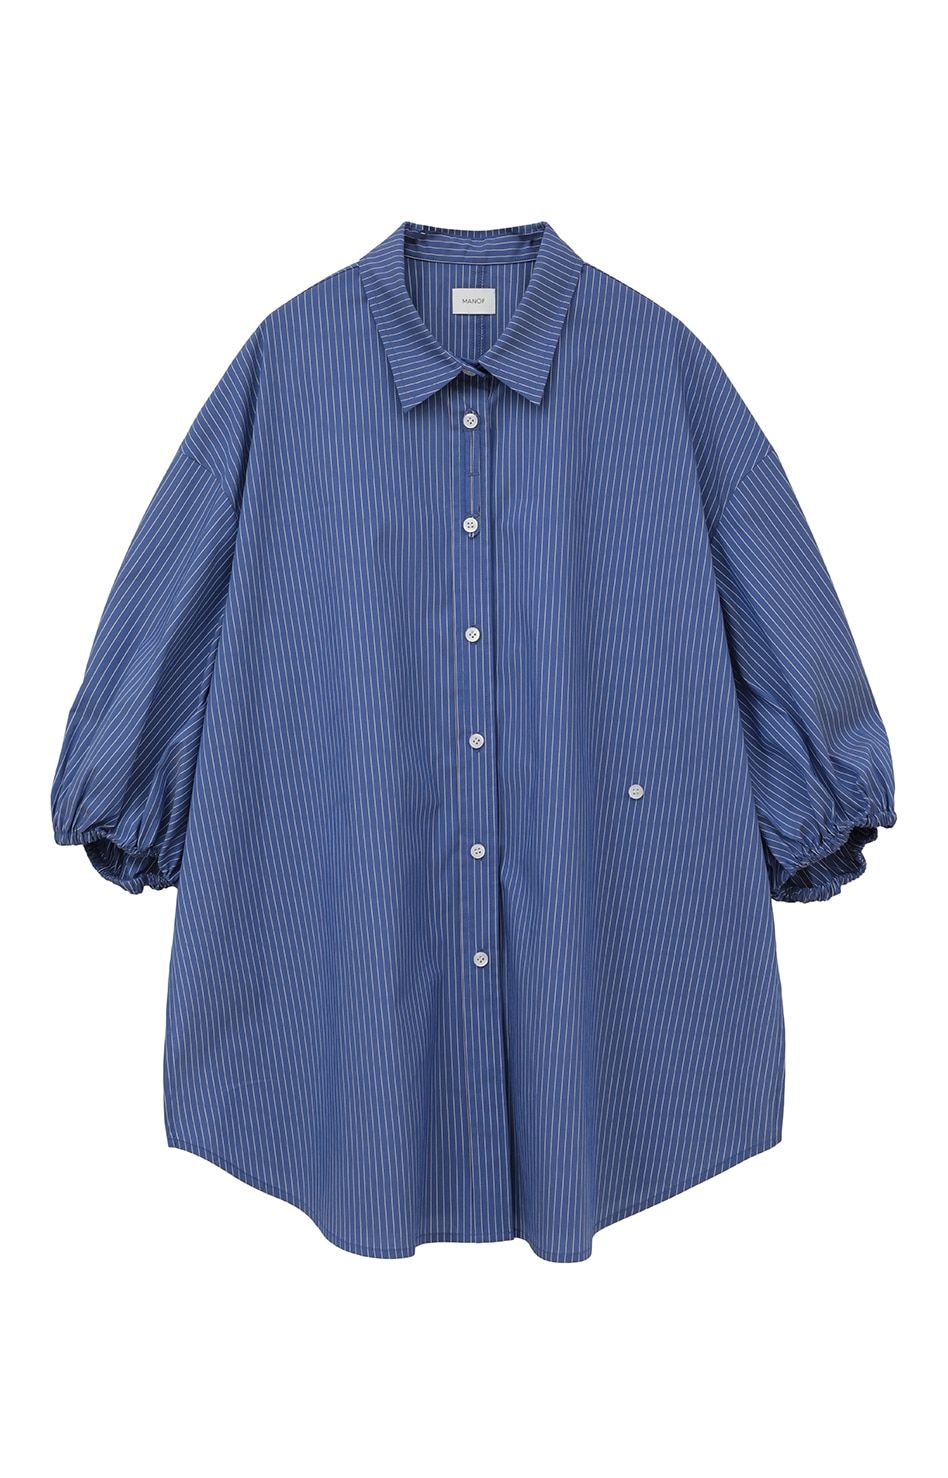 MANOF - バルーンスリーブシャツ - BALOON SLEEVE SHIRT - STRIPE | ADDICT WEB SHOP